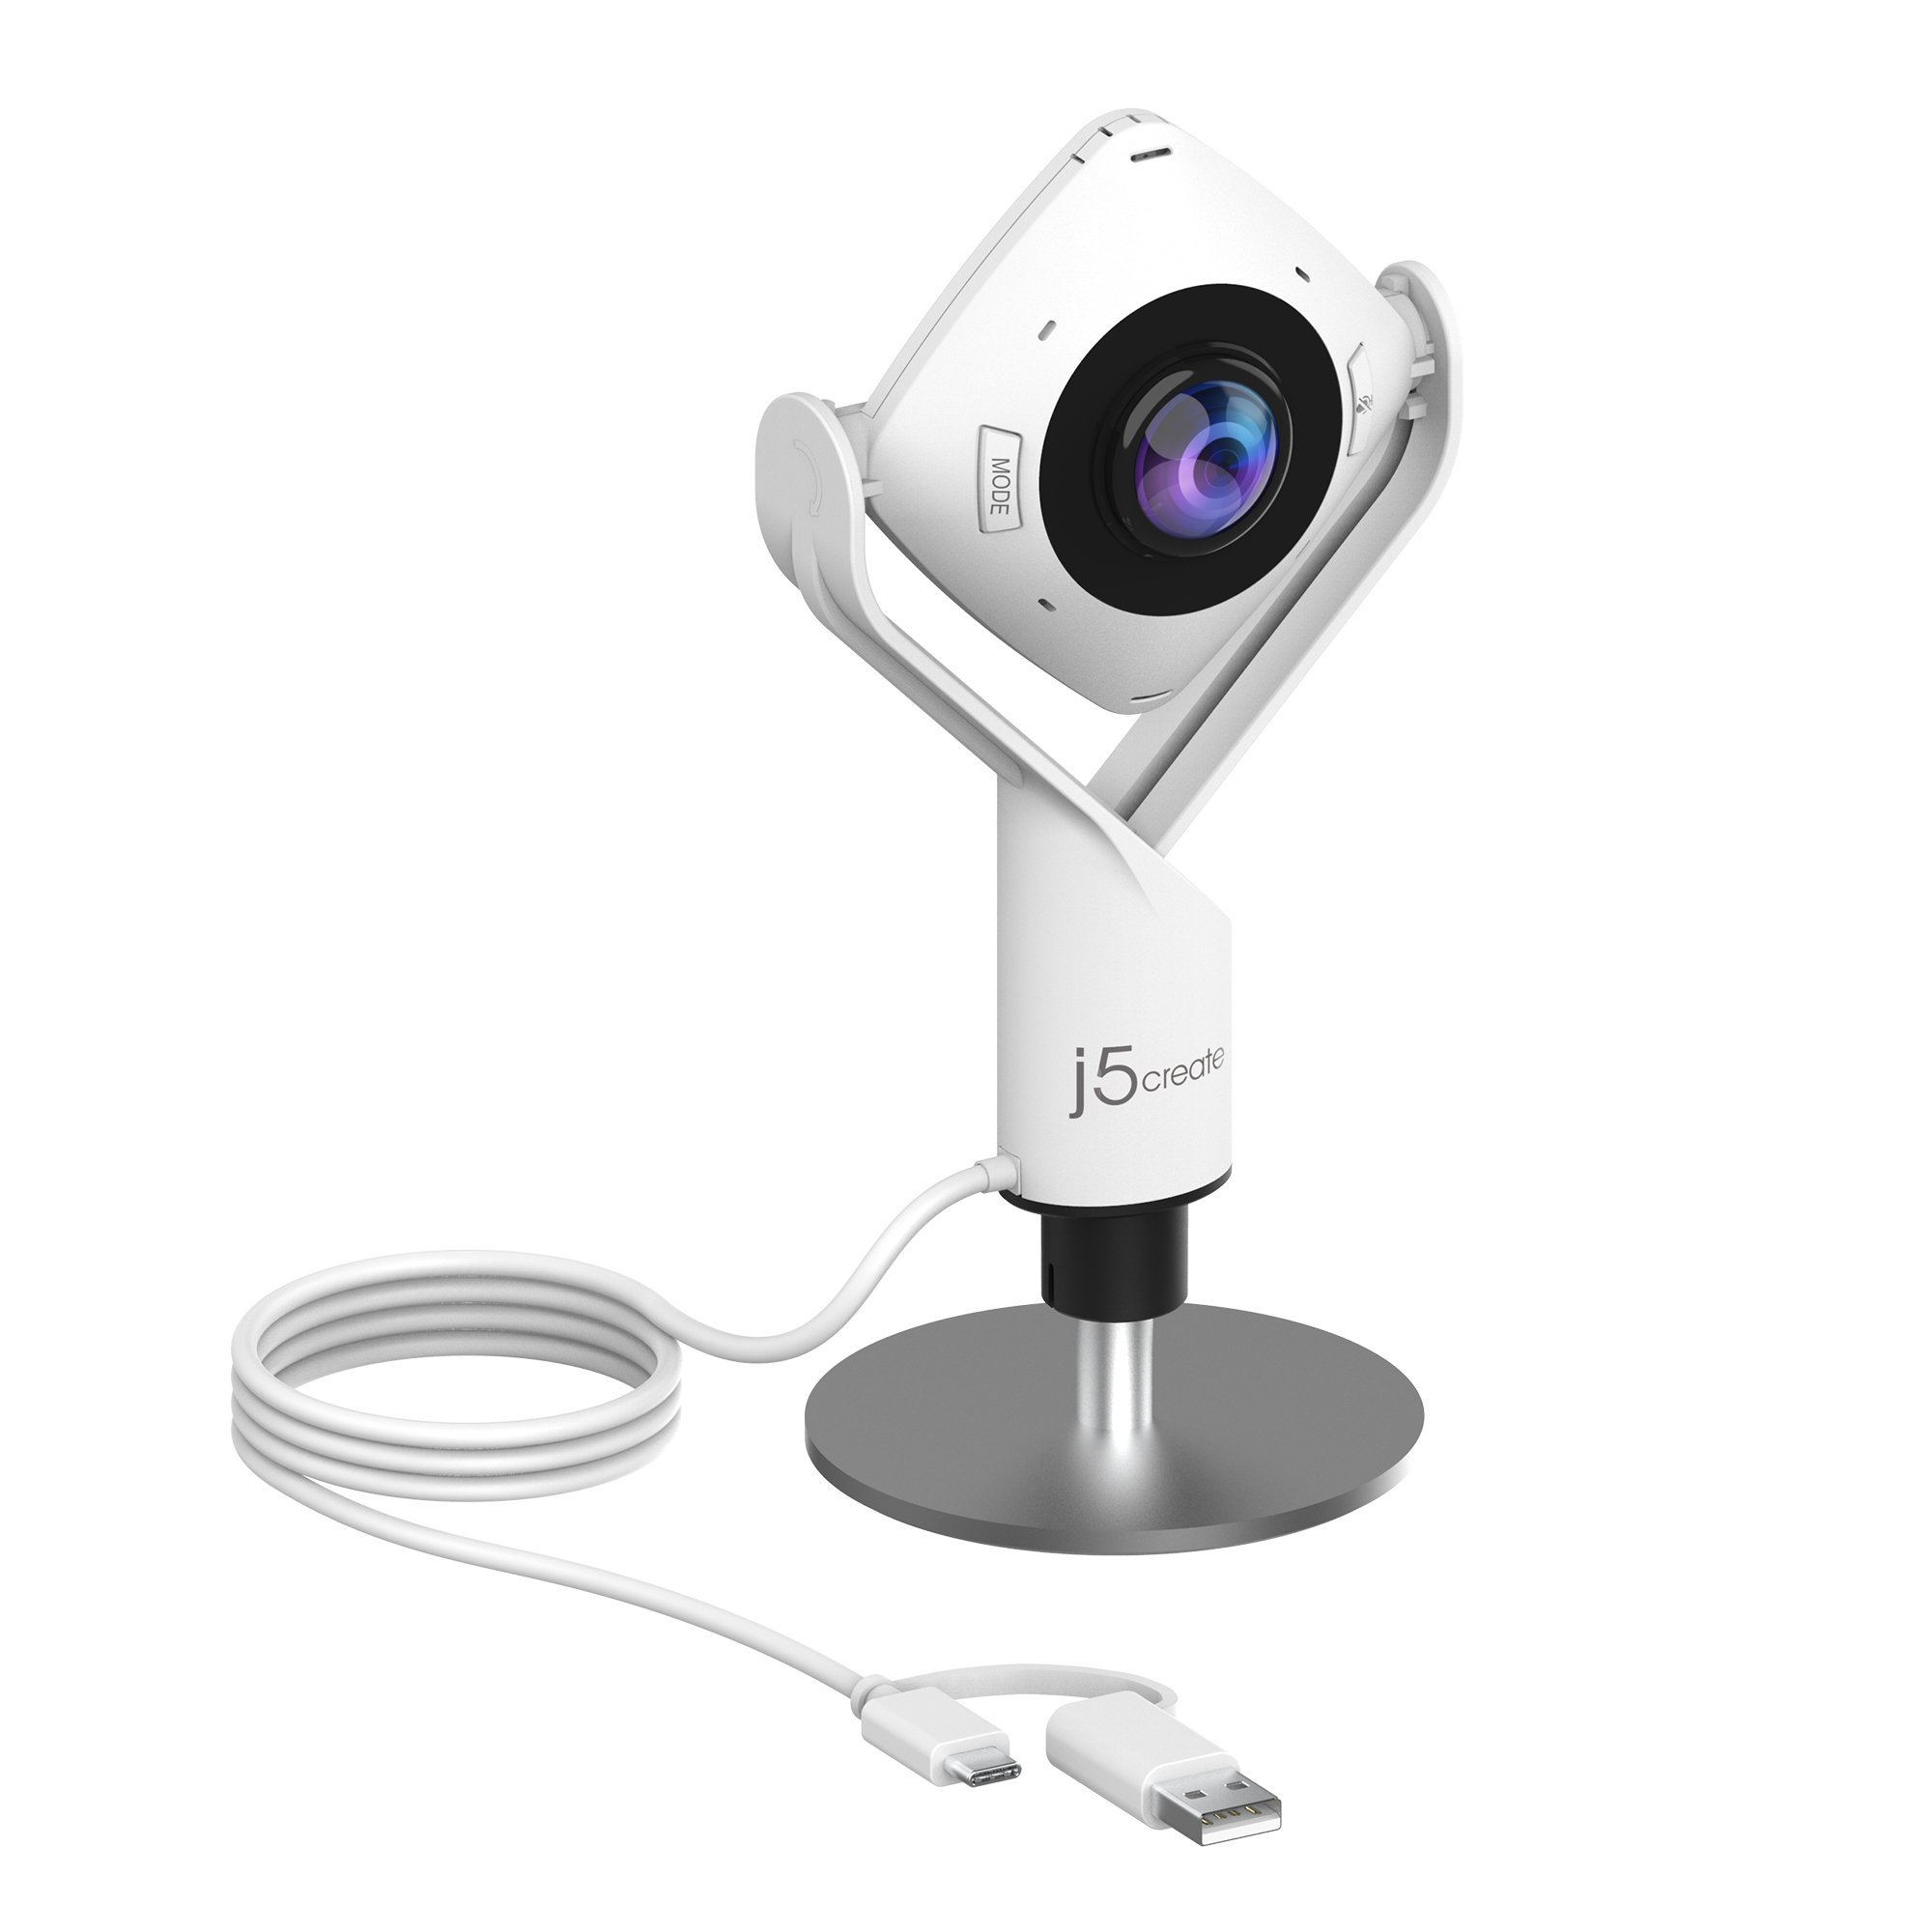 j5create JVCU360 webcam 2.07 MP 1920 x 1080 pixels USB 2.0 Black, White